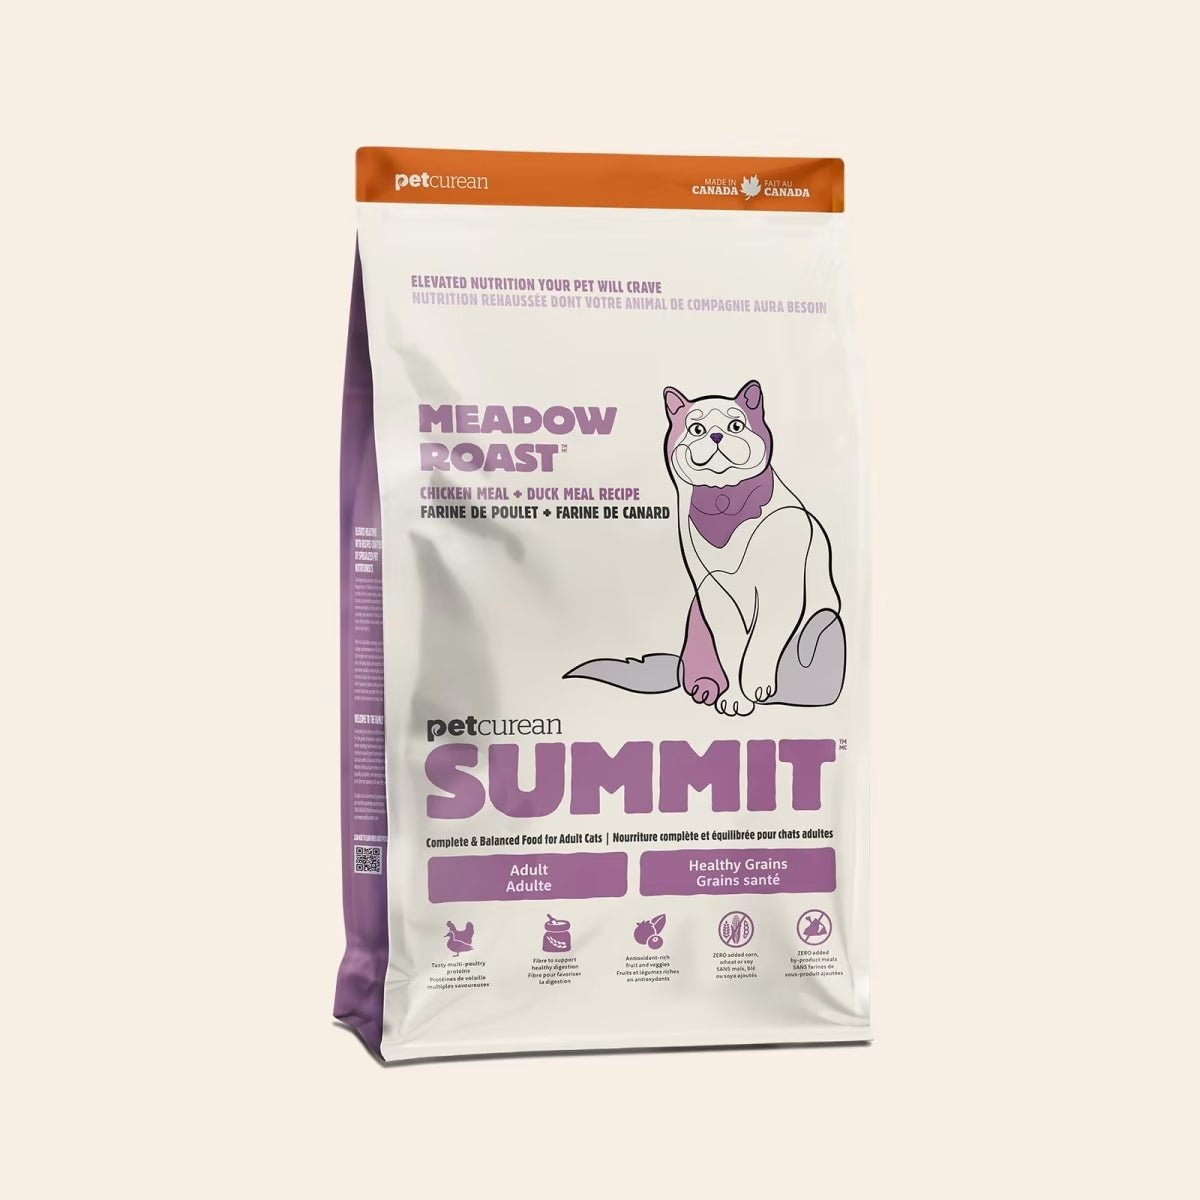 Meadow Roast Chicken Meal + Duck Meal Recipe - Dry Cat Food - Summit - PetToba-Summit